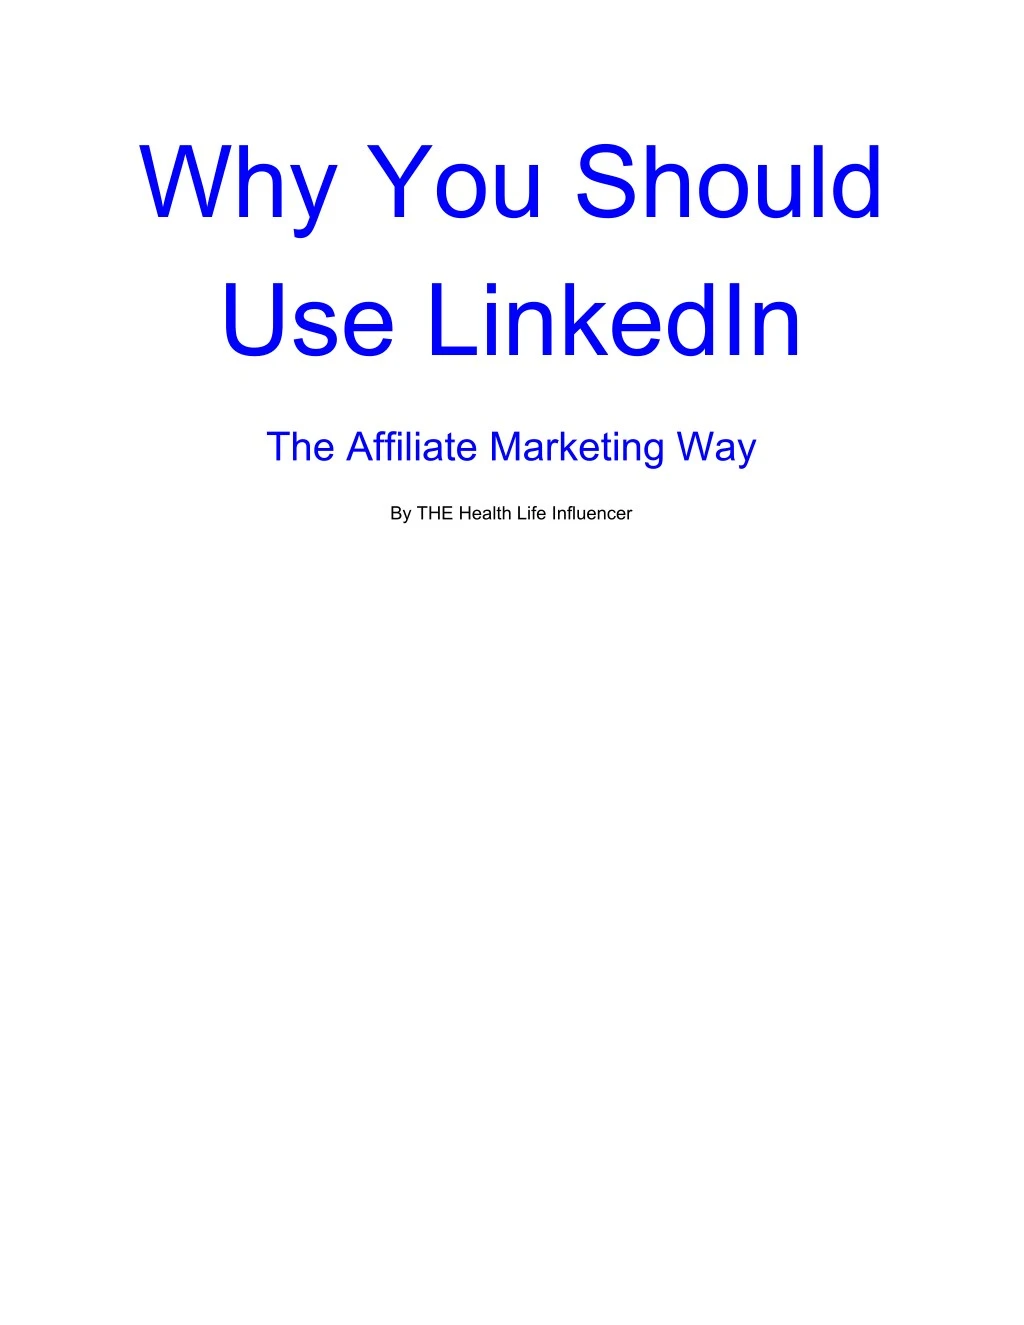 why you should use linkedin